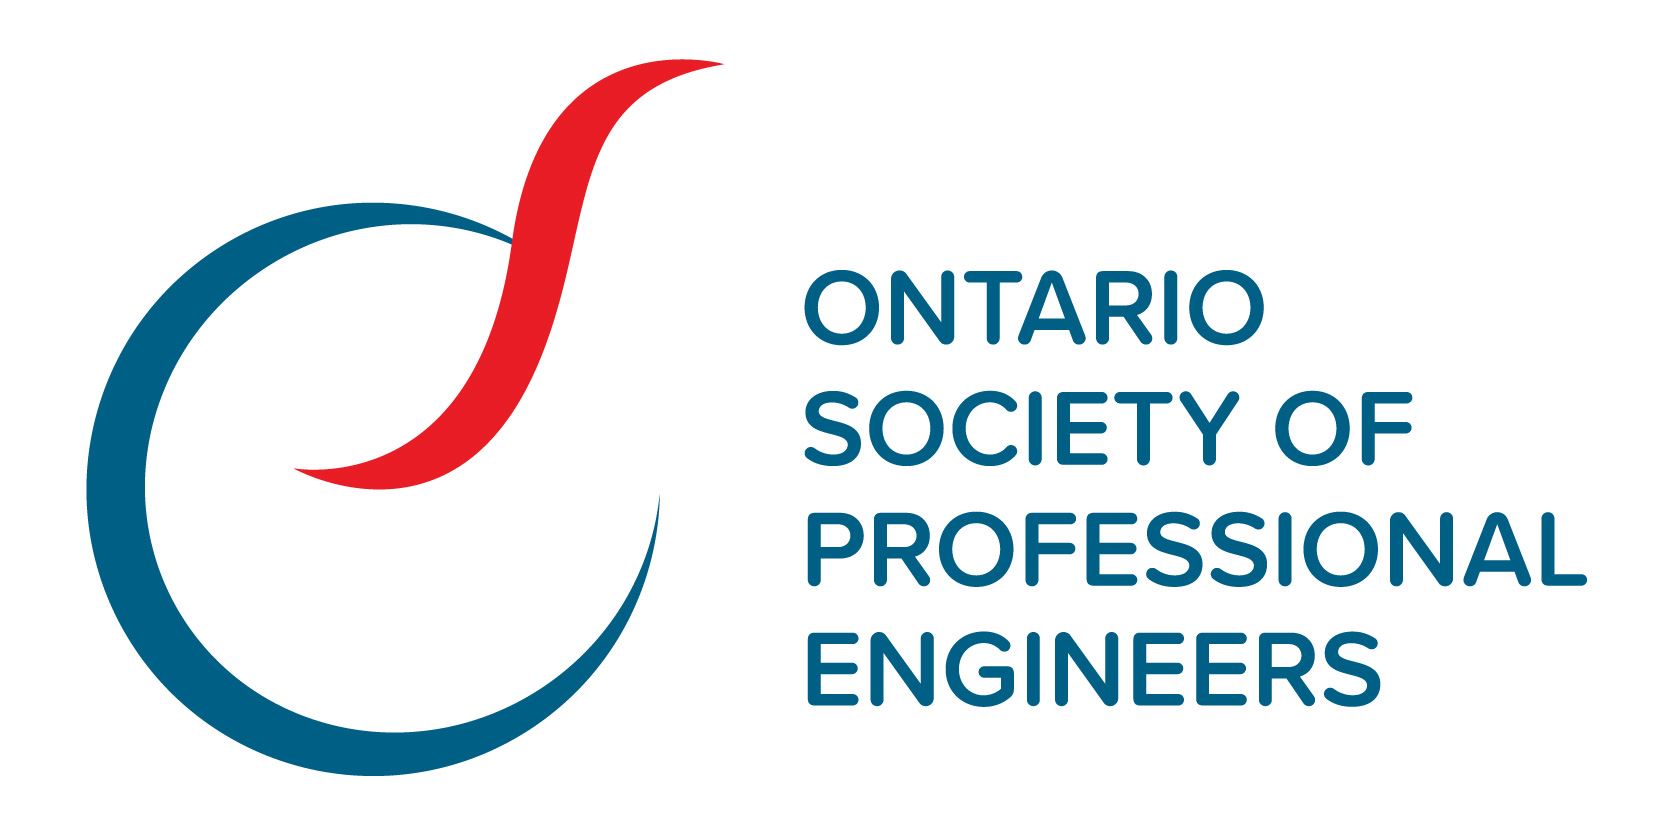 Ontario Society of Professional Engineers logo